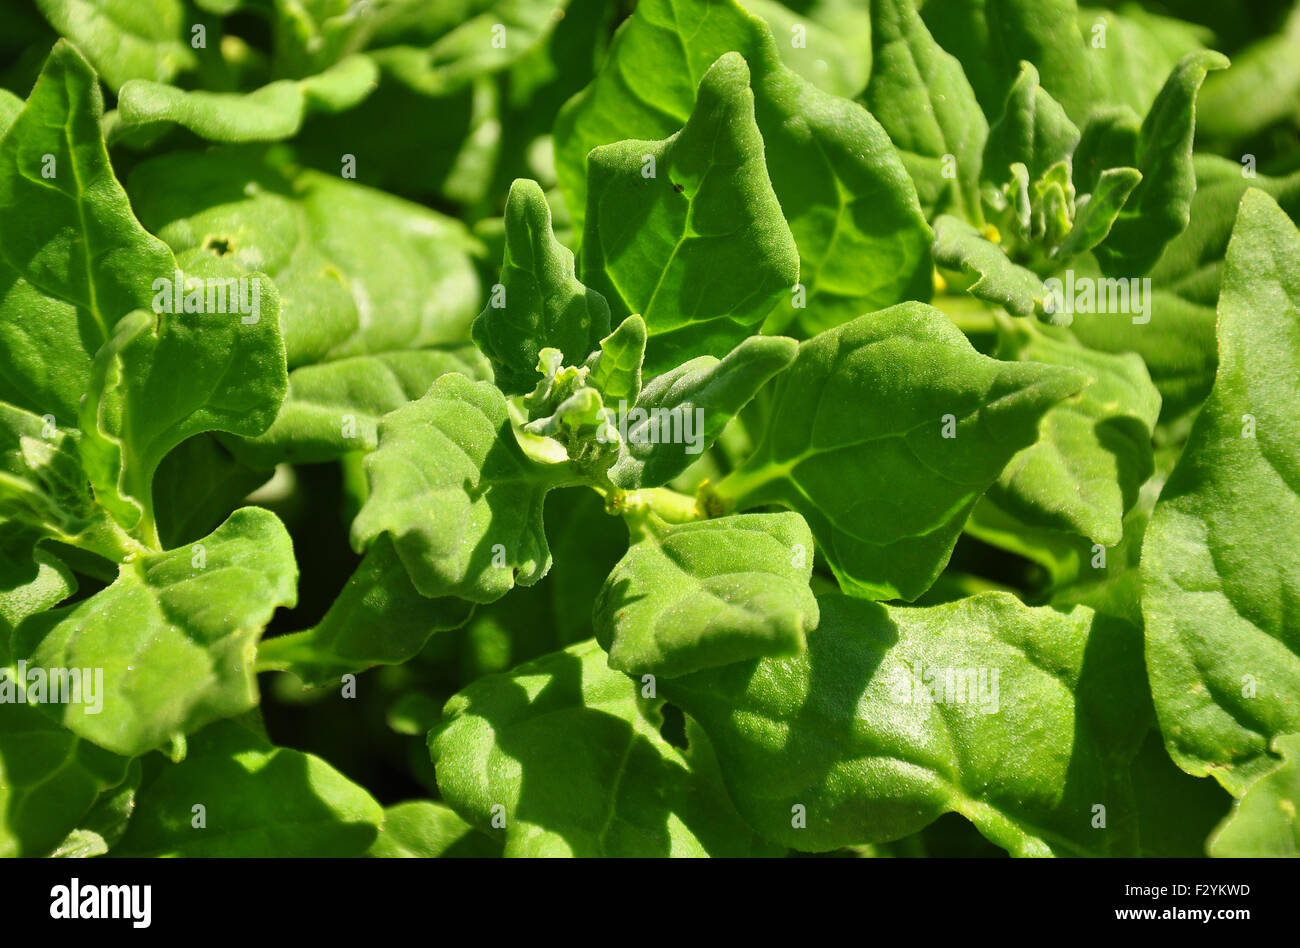 New Zealand spinach (Tetragonia tetragonioides) Stock Photo